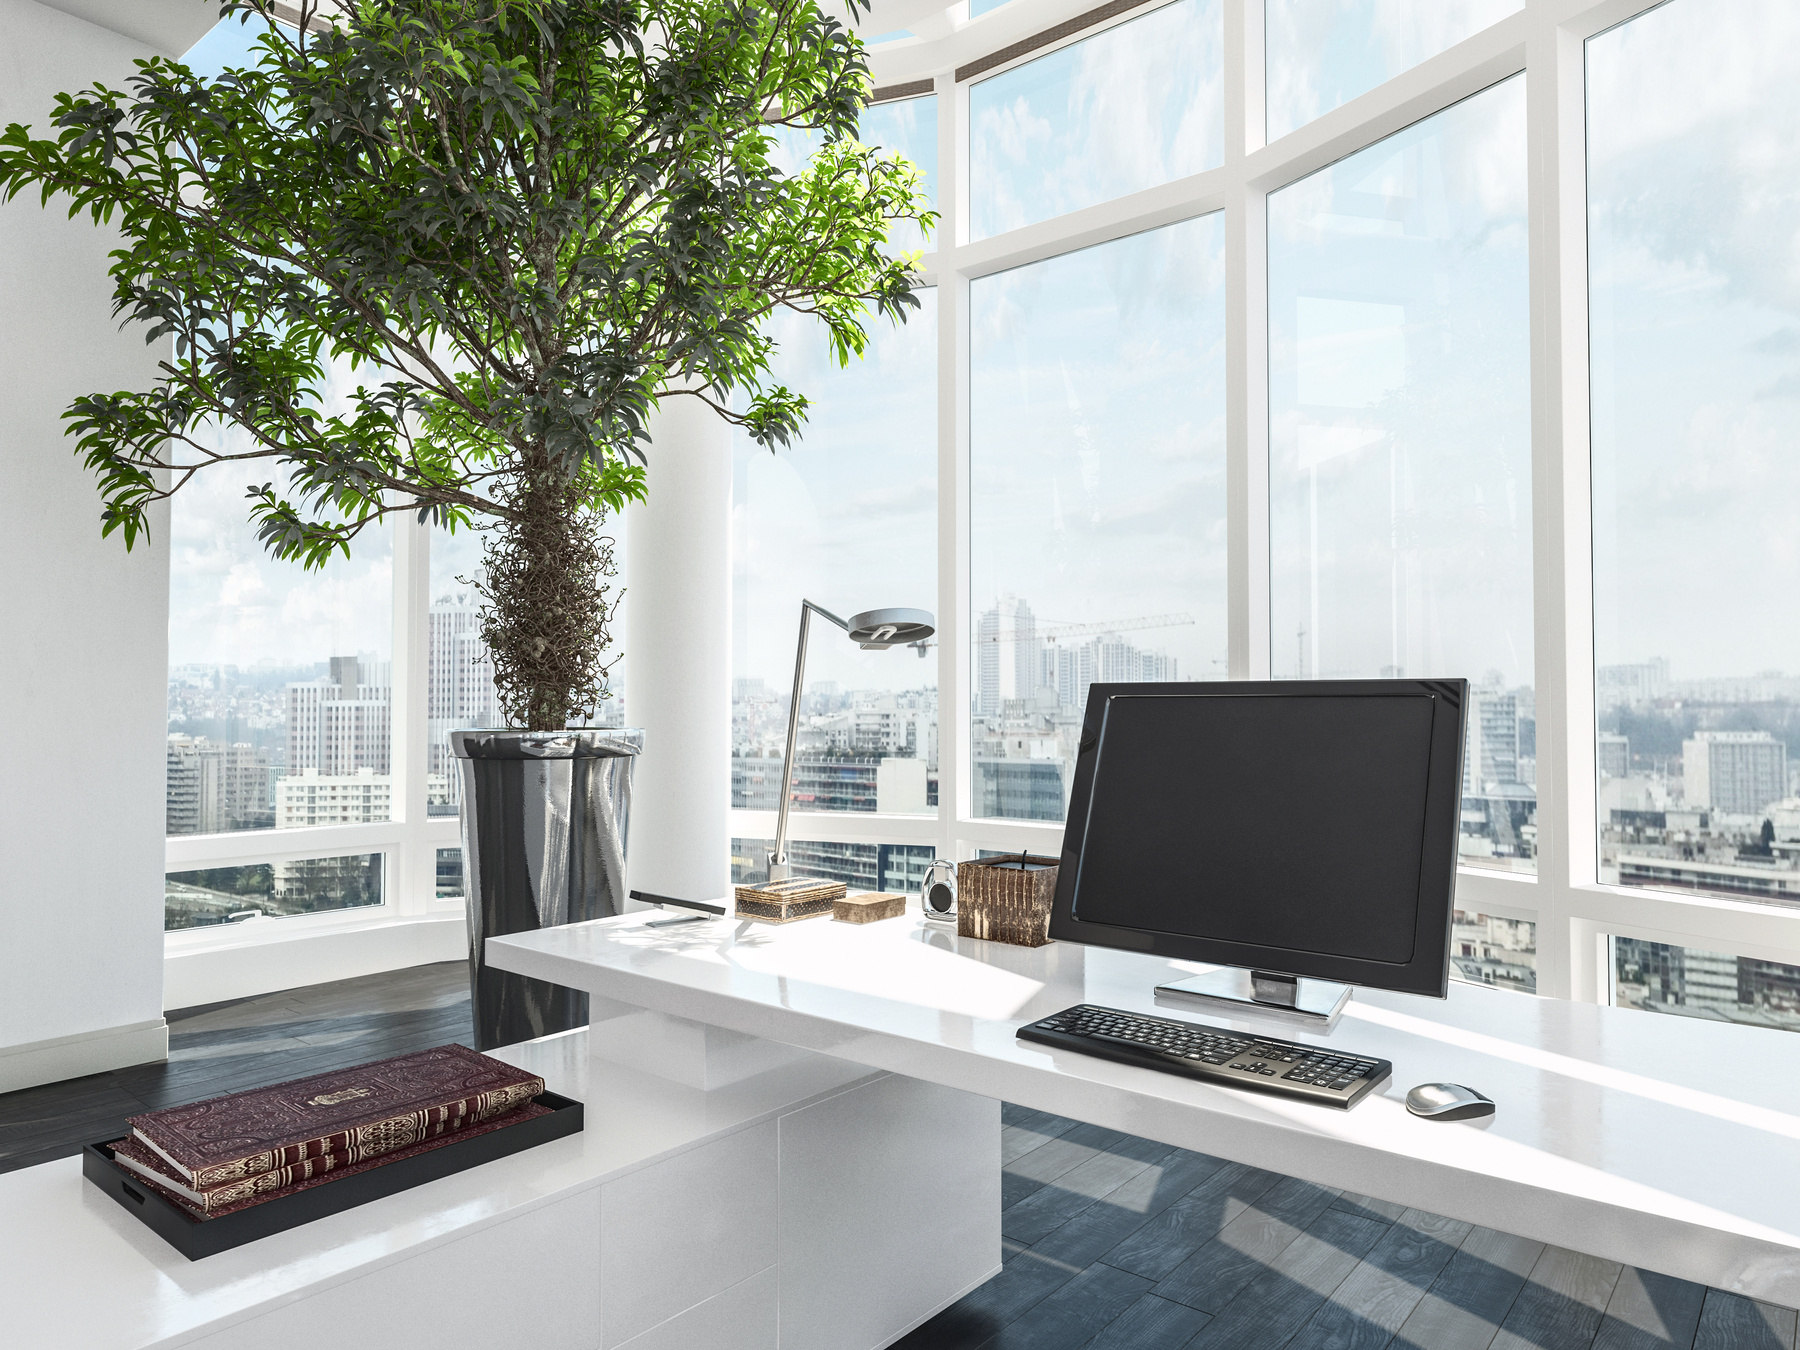 Luxury Modern Office Overlooking a City